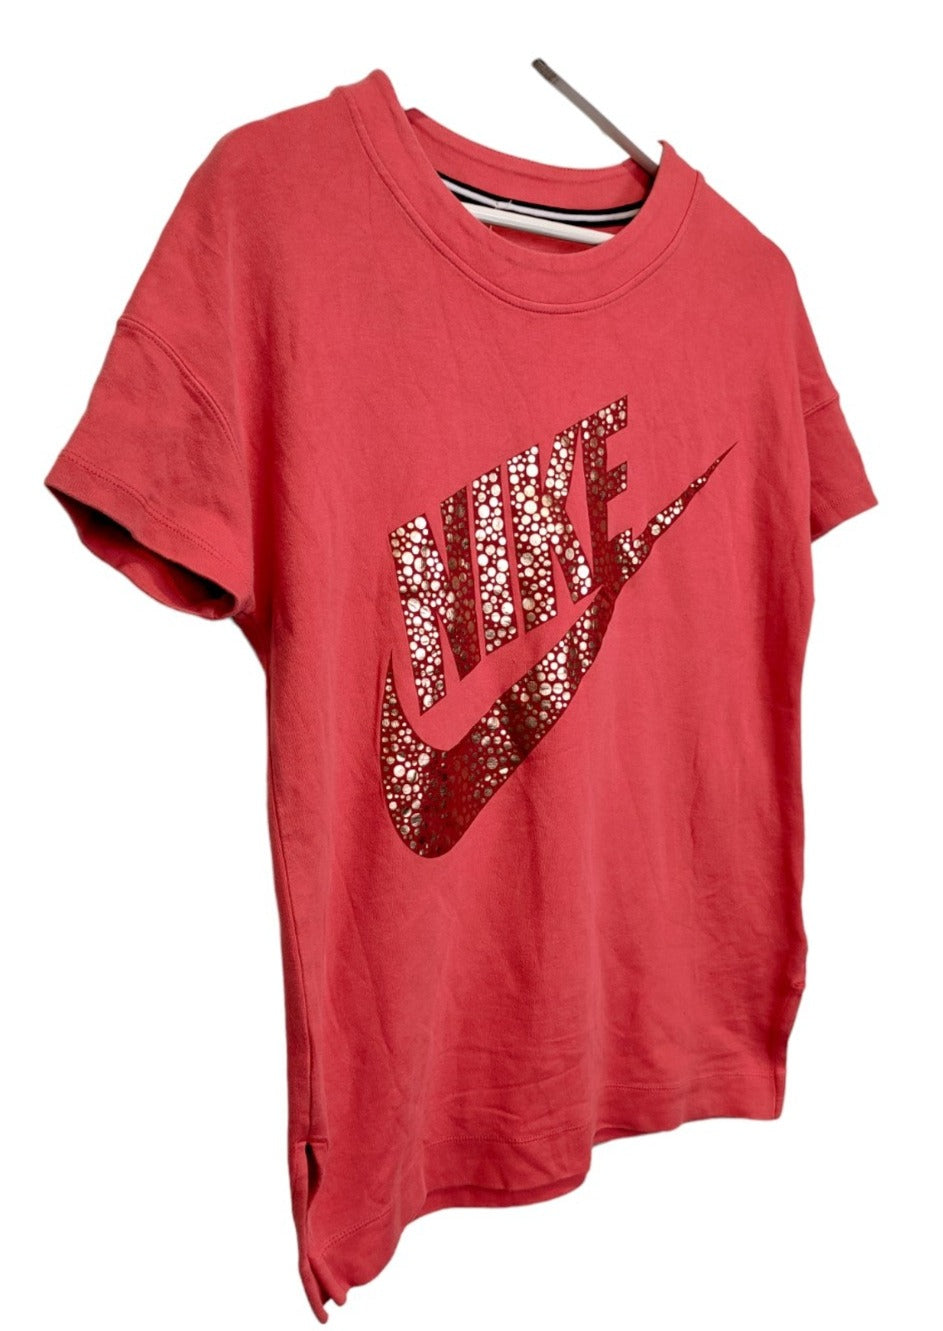 Top Branded, Γυναικεία Αθλητική Κοντομάνικη Μπλούζα σε Κοραλί Χρώμα (Medium)